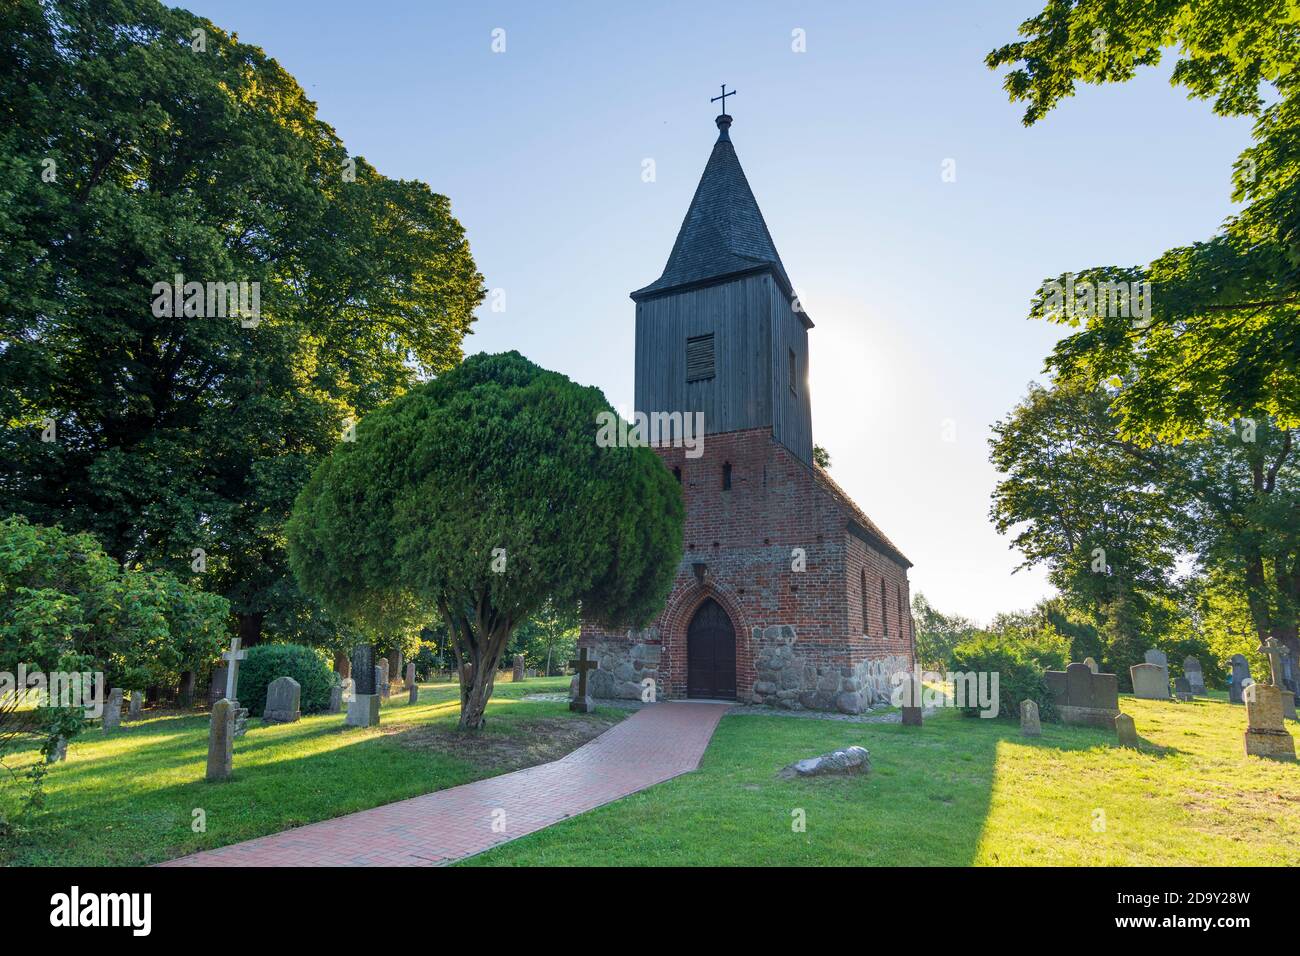 Mönchgut: chiesa nel villaggio di Groß Zicker, Ostsee (Mar Baltico), Isola di Rügen, Meclemburgo-Vorpommern, Germania Foto Stock